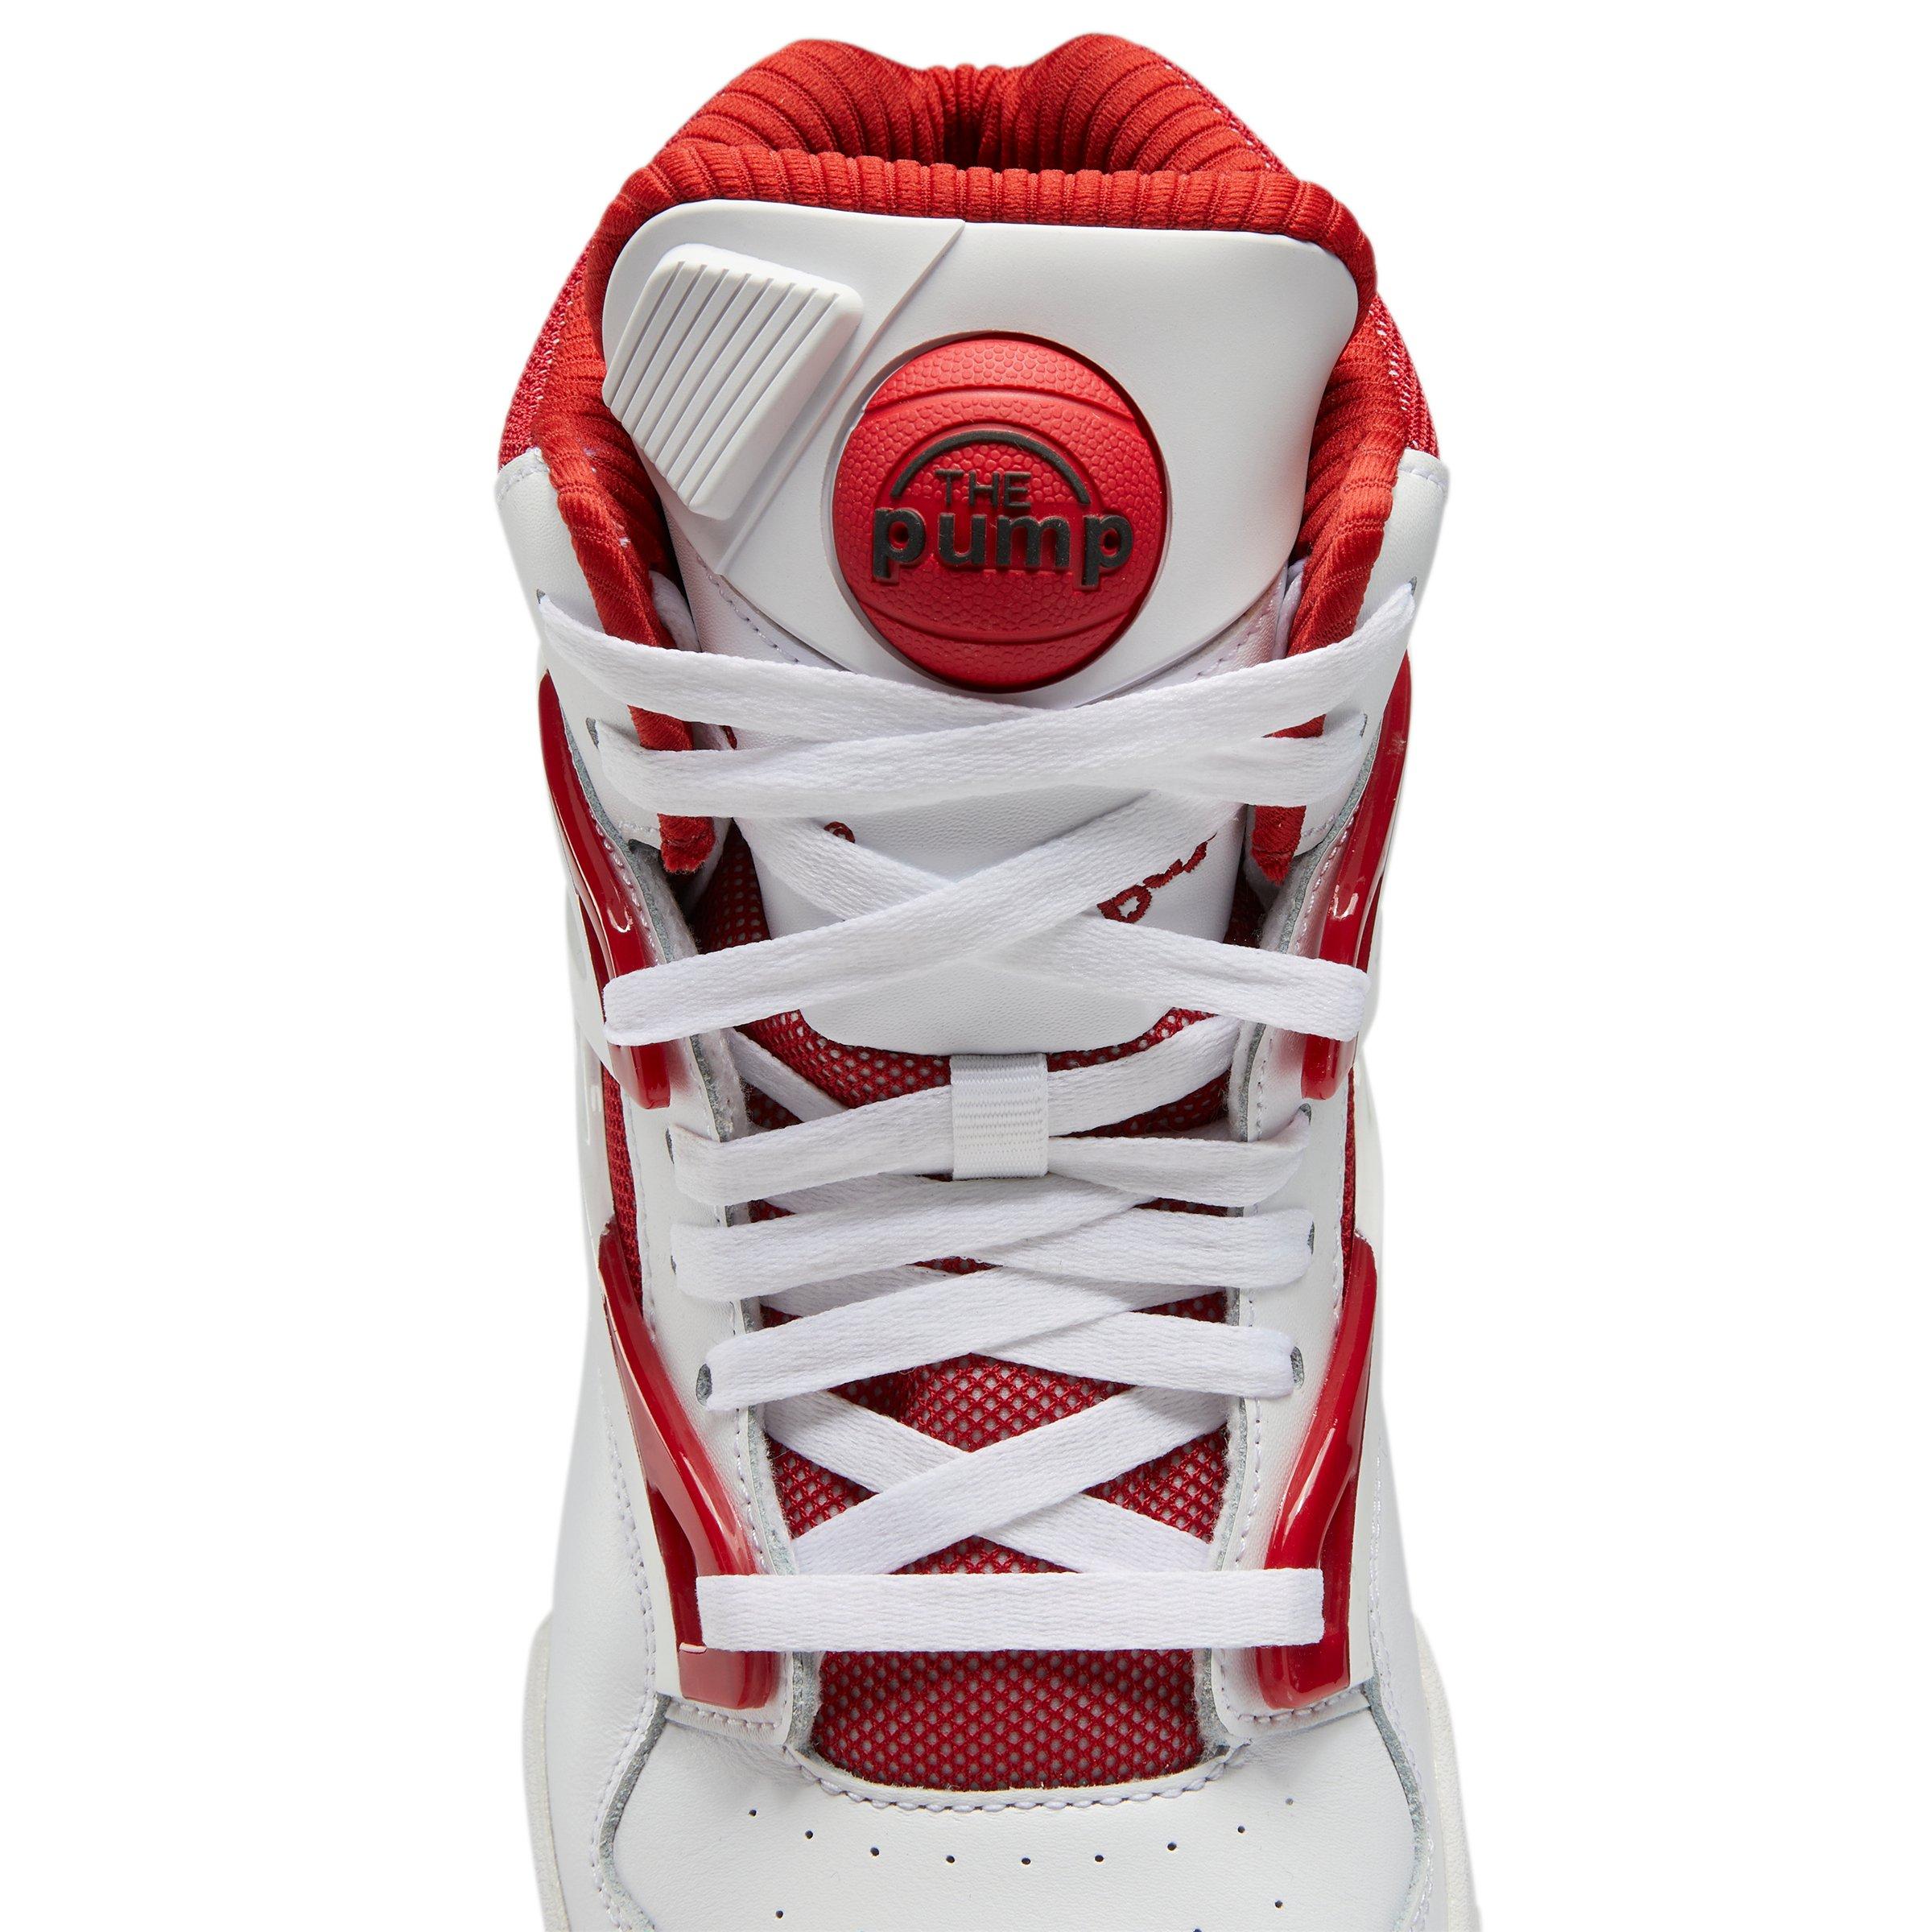 Pump Omni Zone II "White/Red/Black" Men's Basketball Shoe - | City Gear